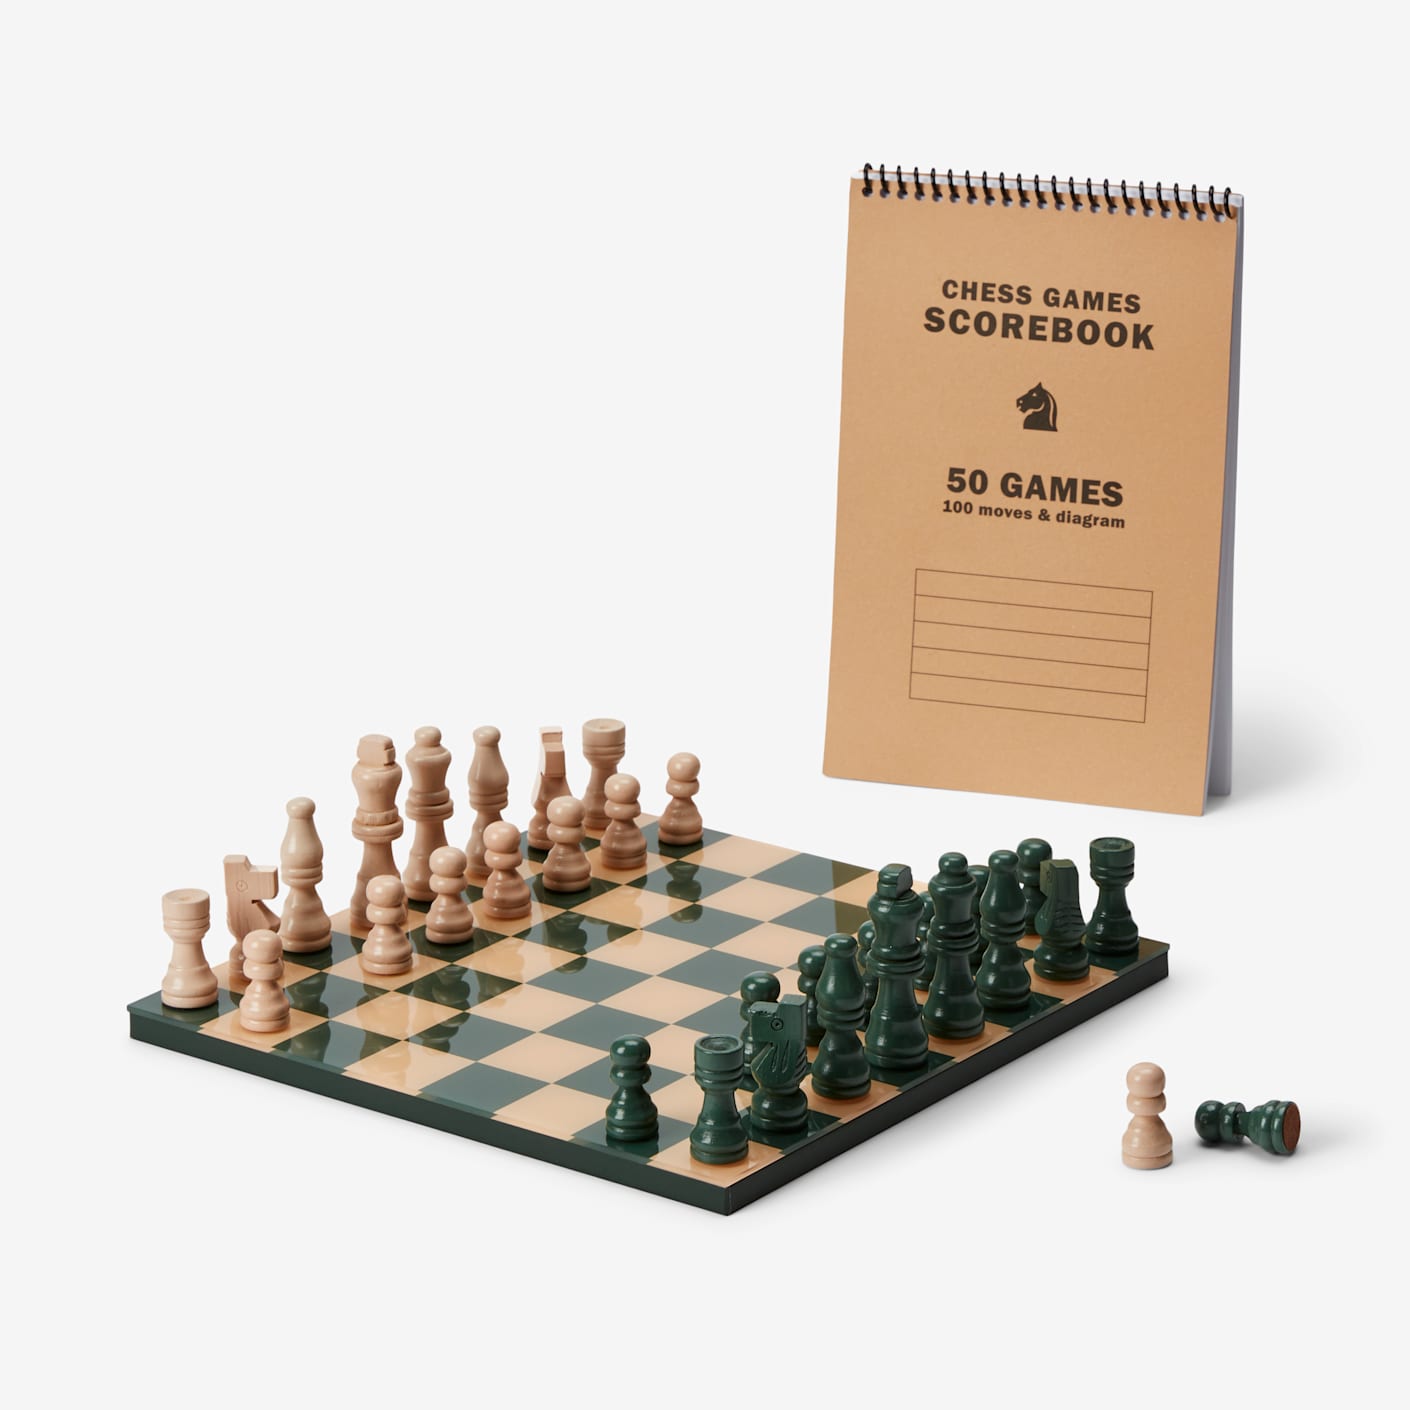 Fotografia checkmate on the chessboard, chess - em